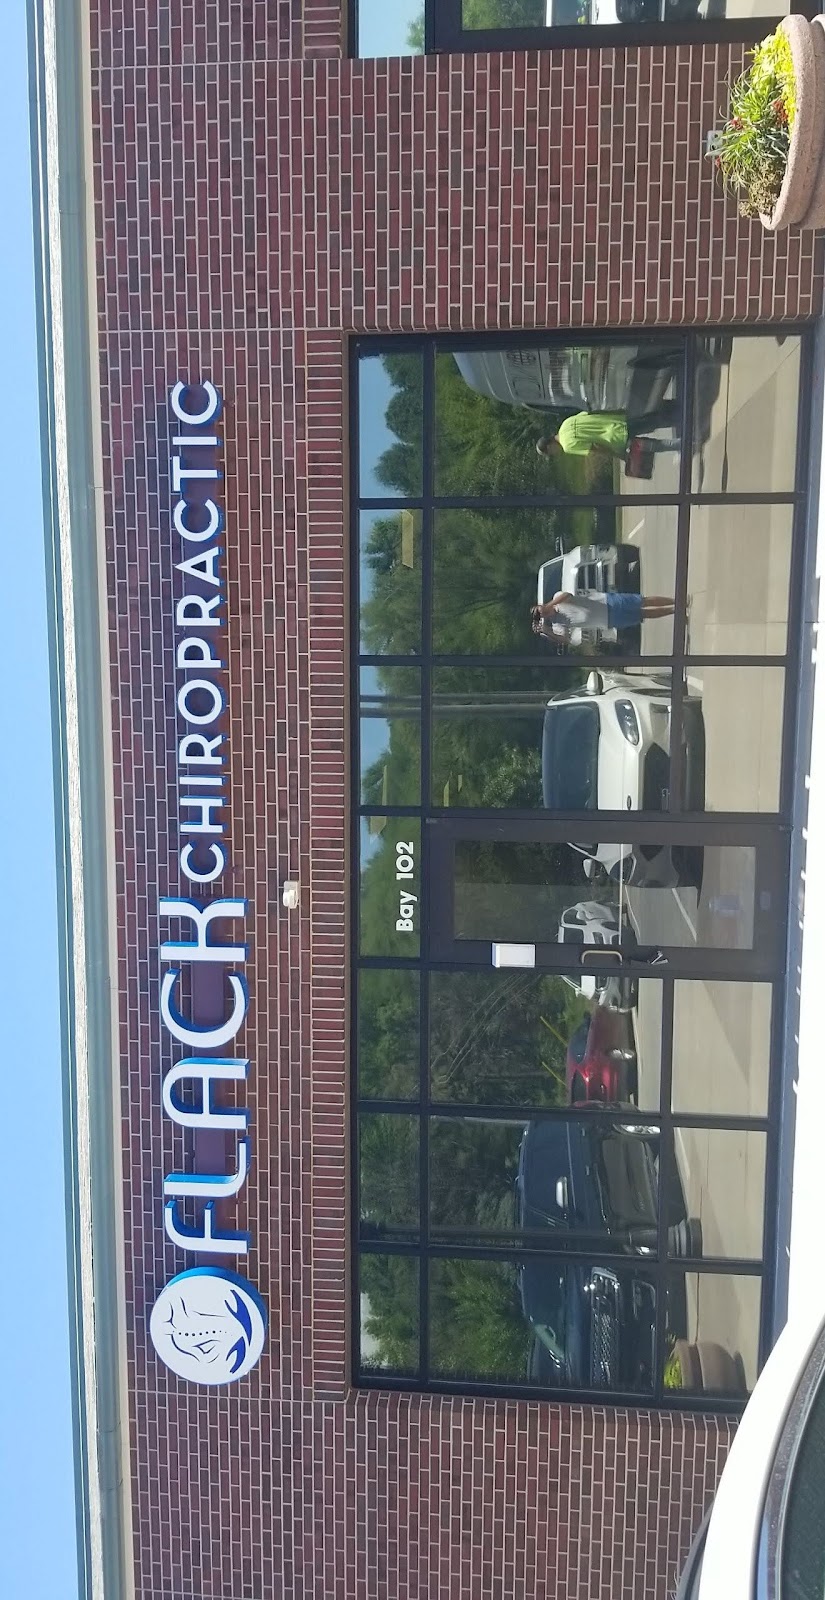 Flack Chiropractic | 17940 Welch Plaza #102, Omaha, NE 68135, USA | Phone: (531) 999-2080